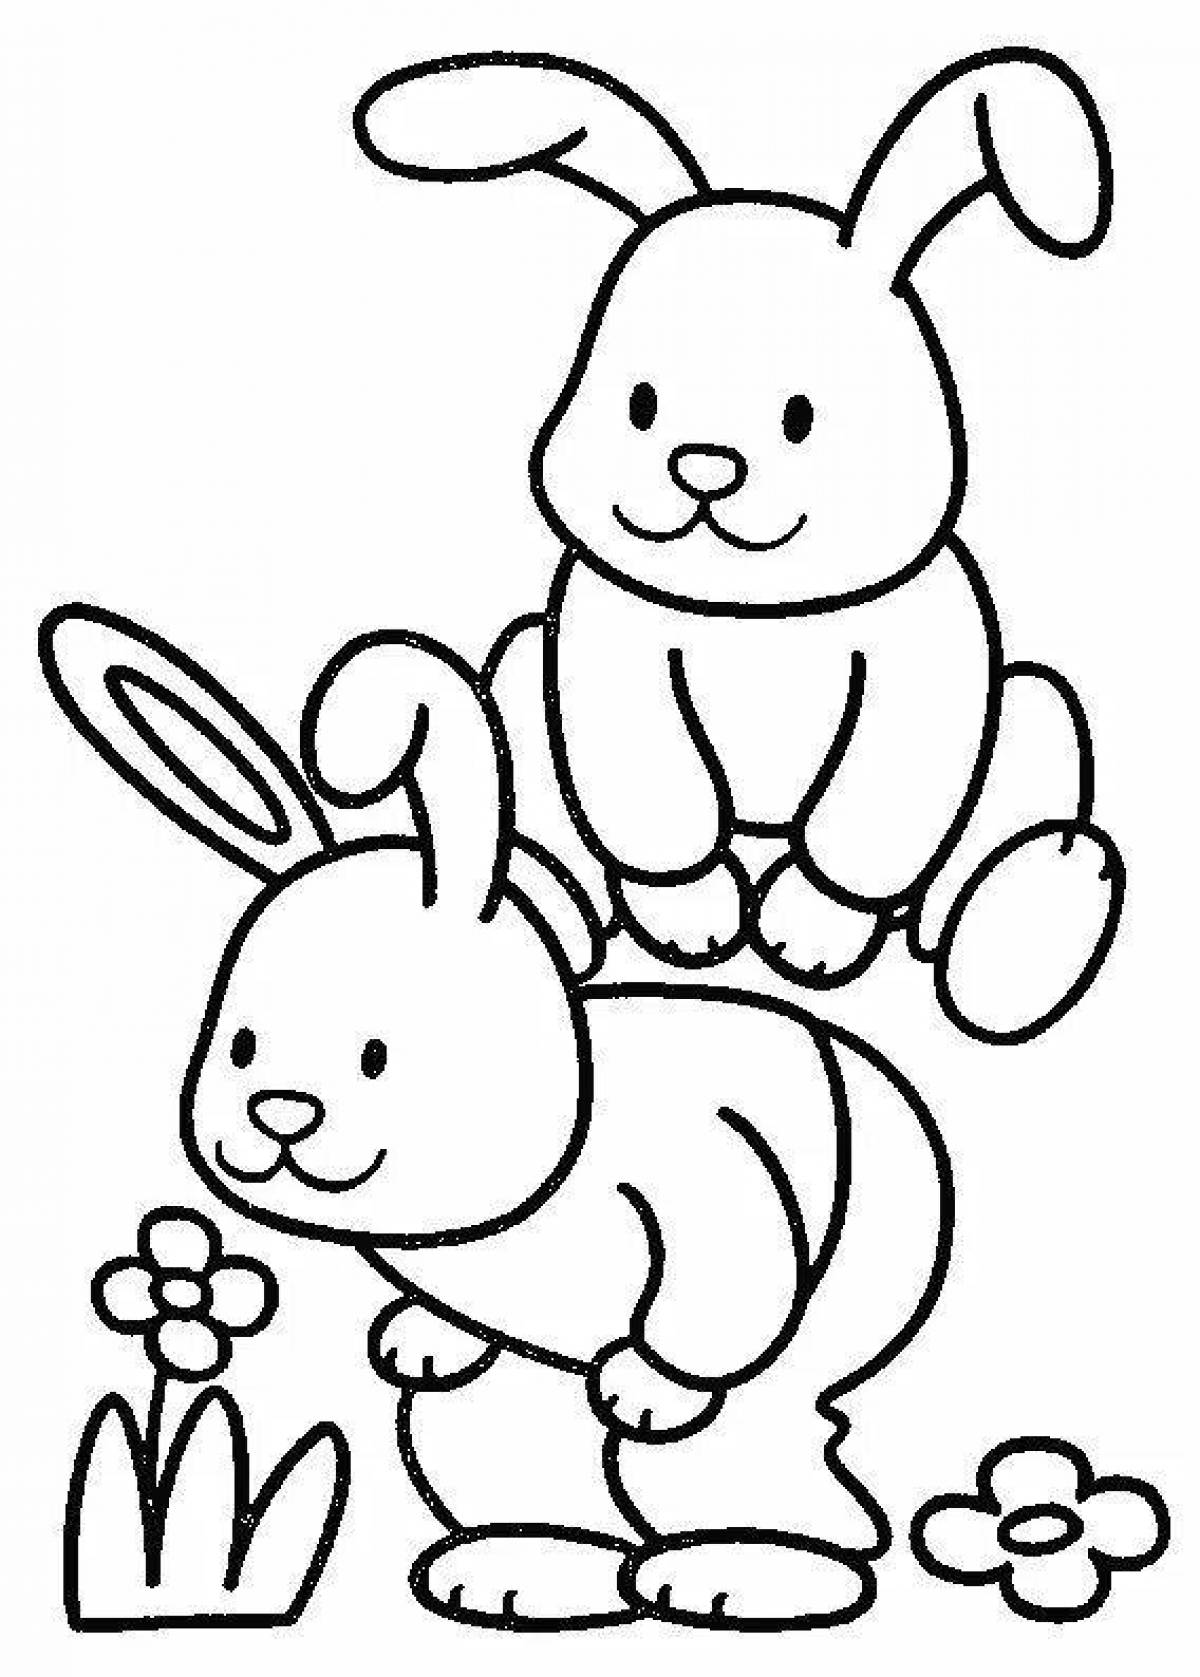 Wiggly coloring page bunny для детей